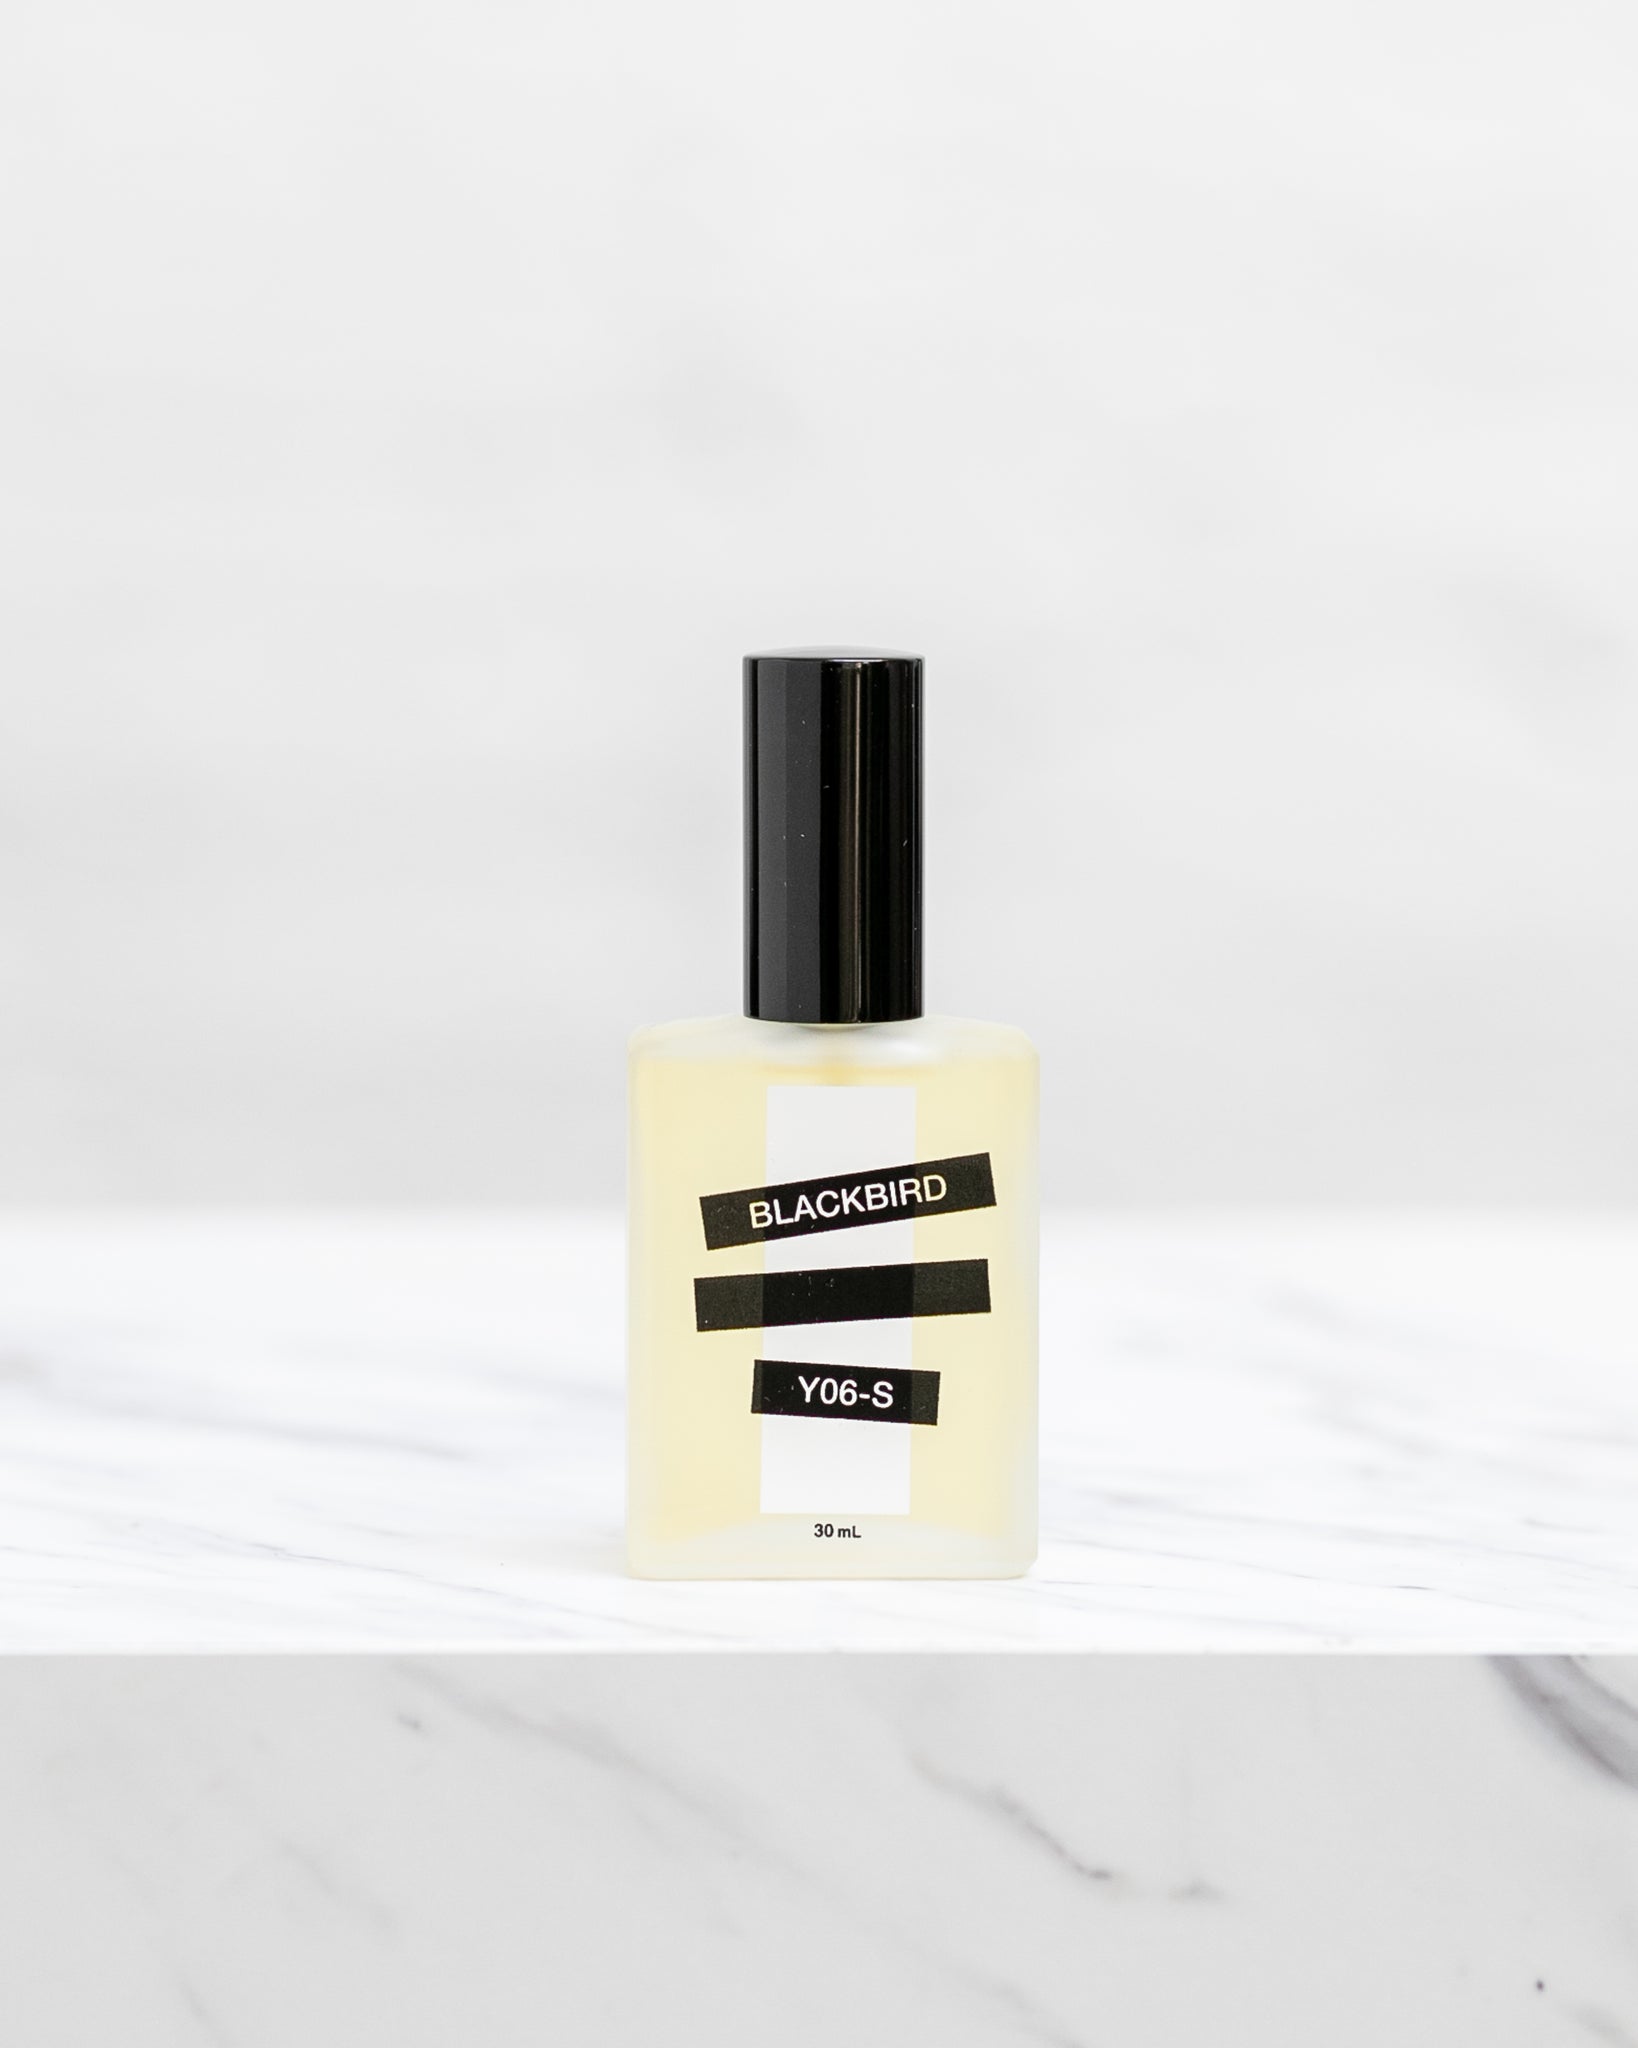 Blackbird Spray Perfume, Y06-S bottle